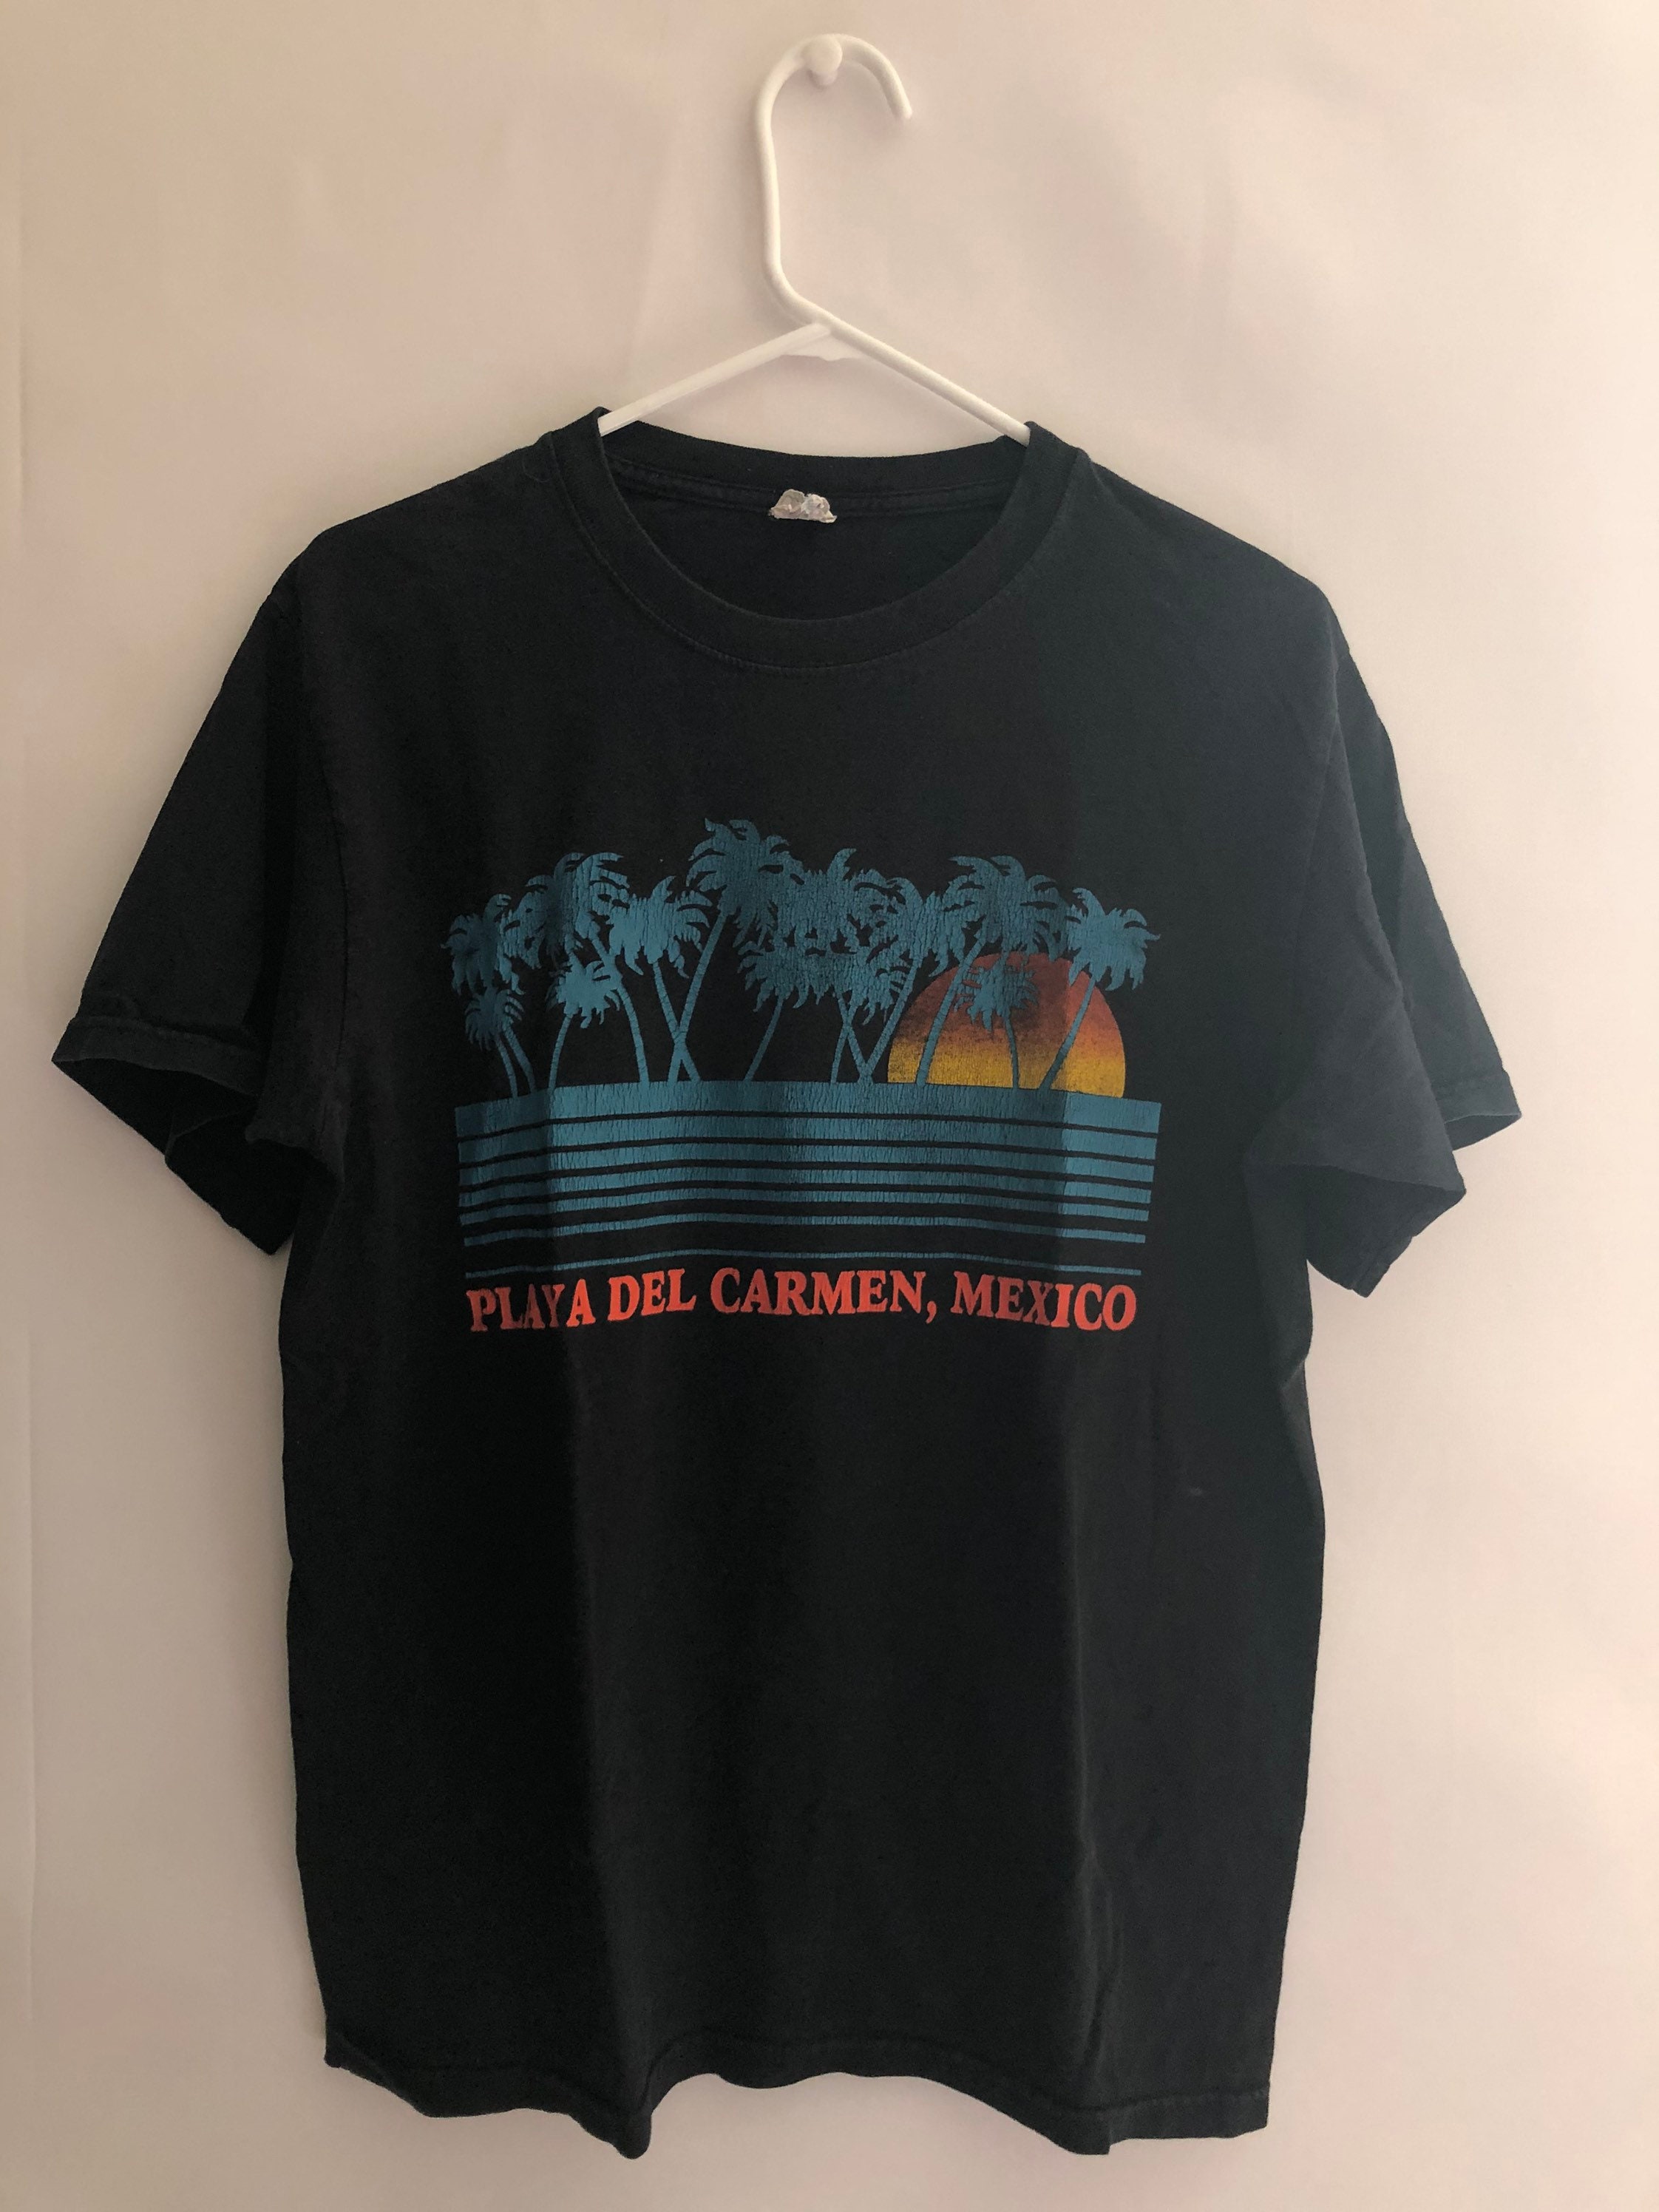 Vintage Mexico tourist t shirt | Etsy